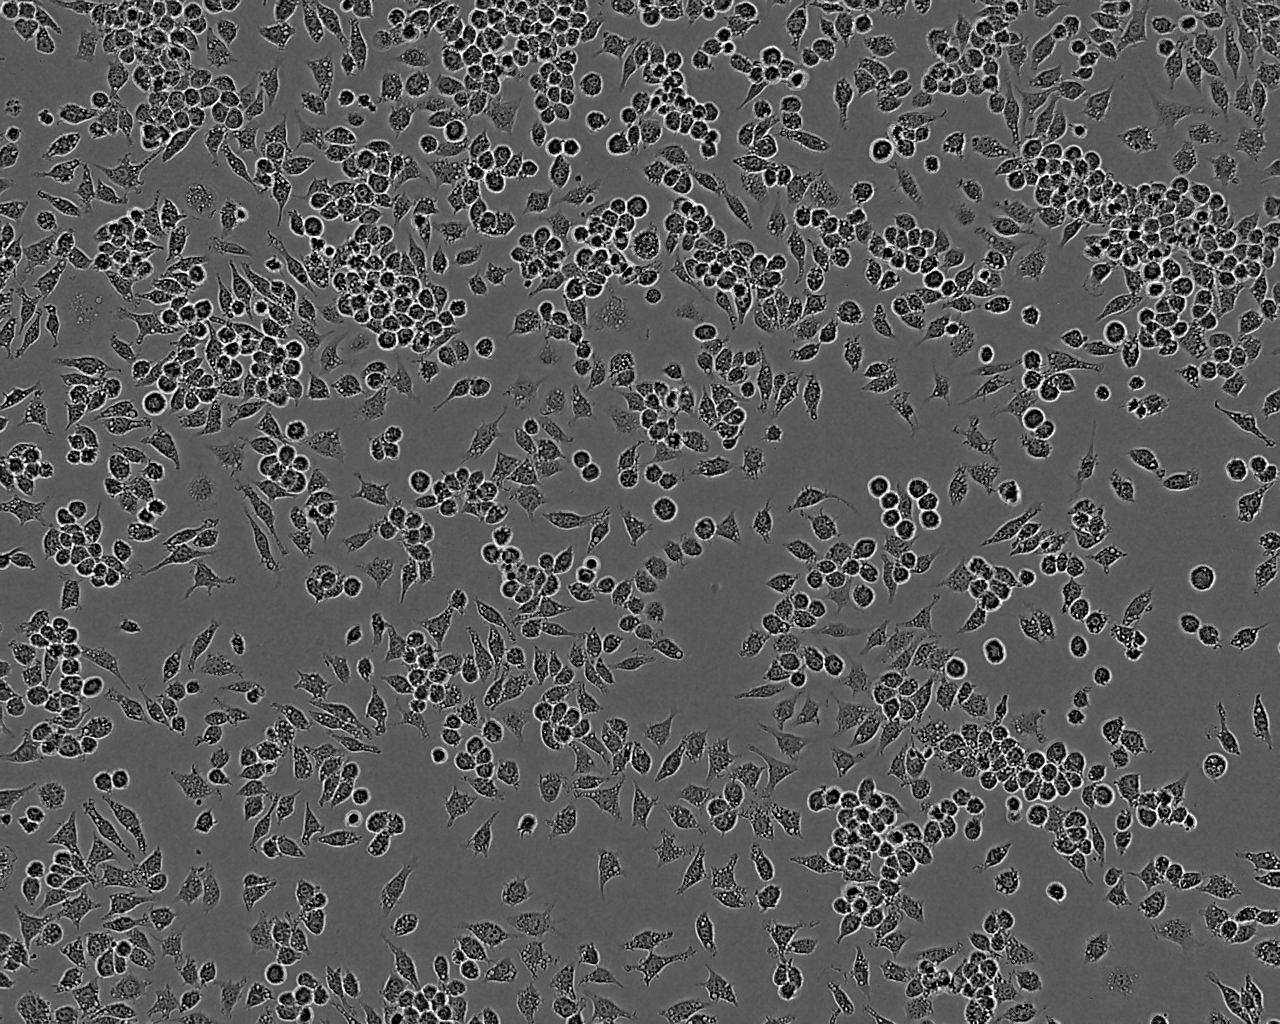 J82 Cell|人膀胱移行癌细胞,J82 Cell